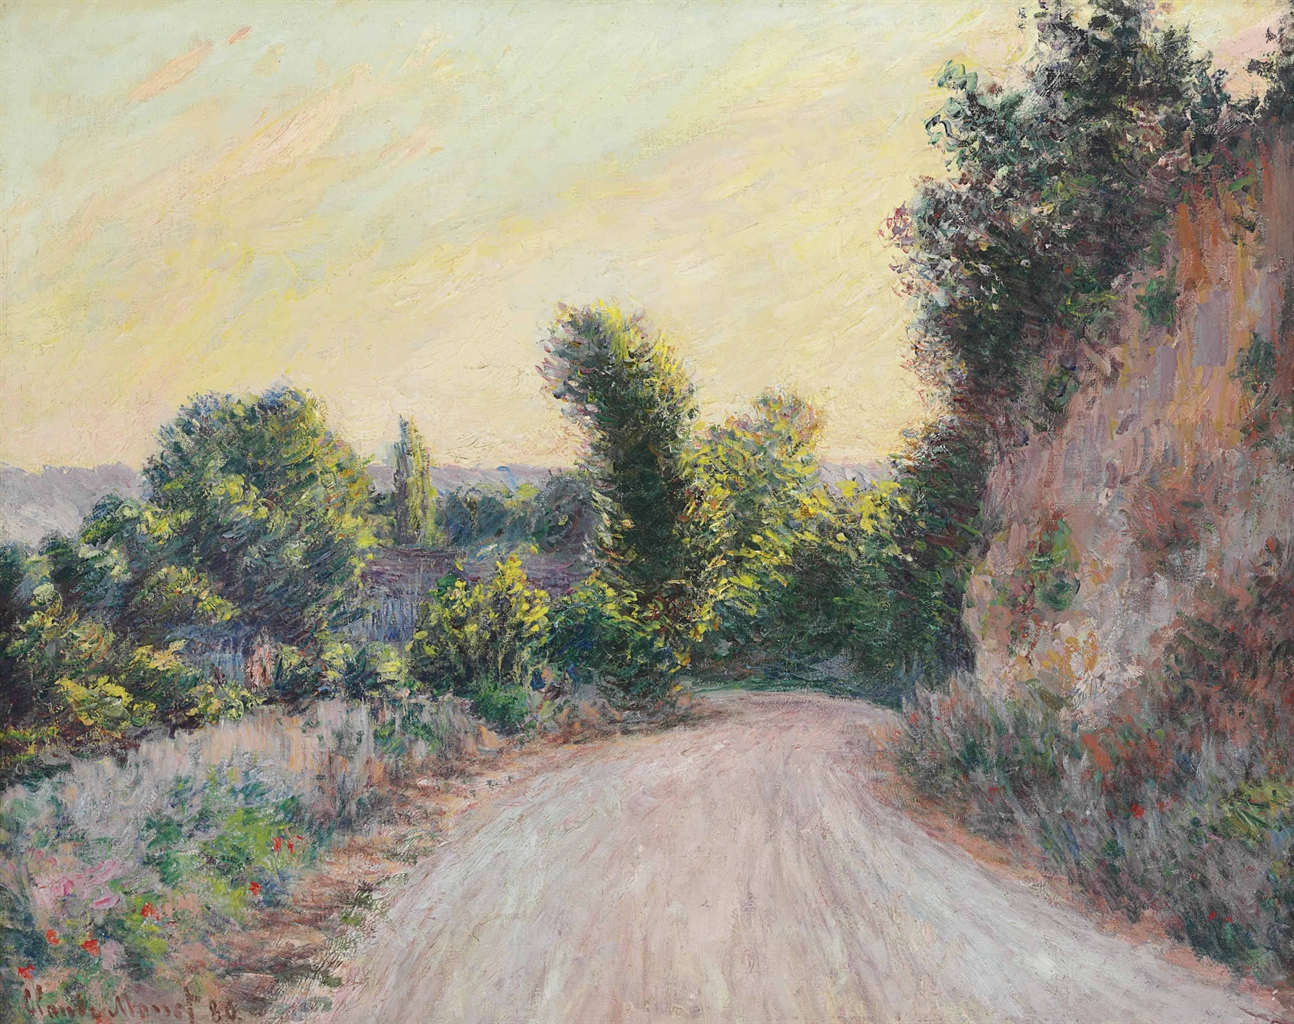 Claude+Monet-1840-1926 (861).jpg